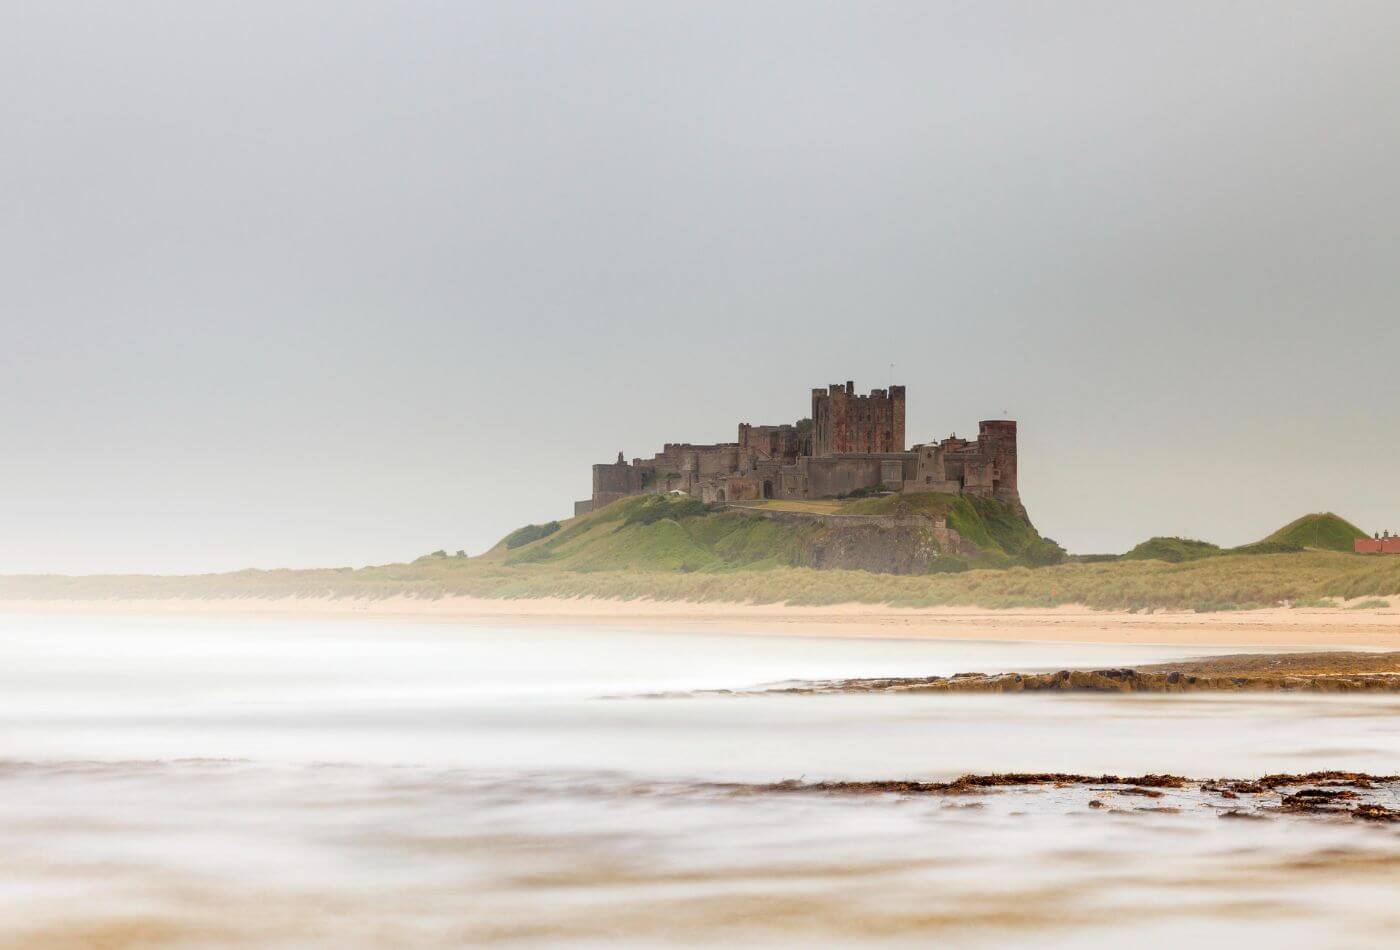 bamburgh castle from the beach